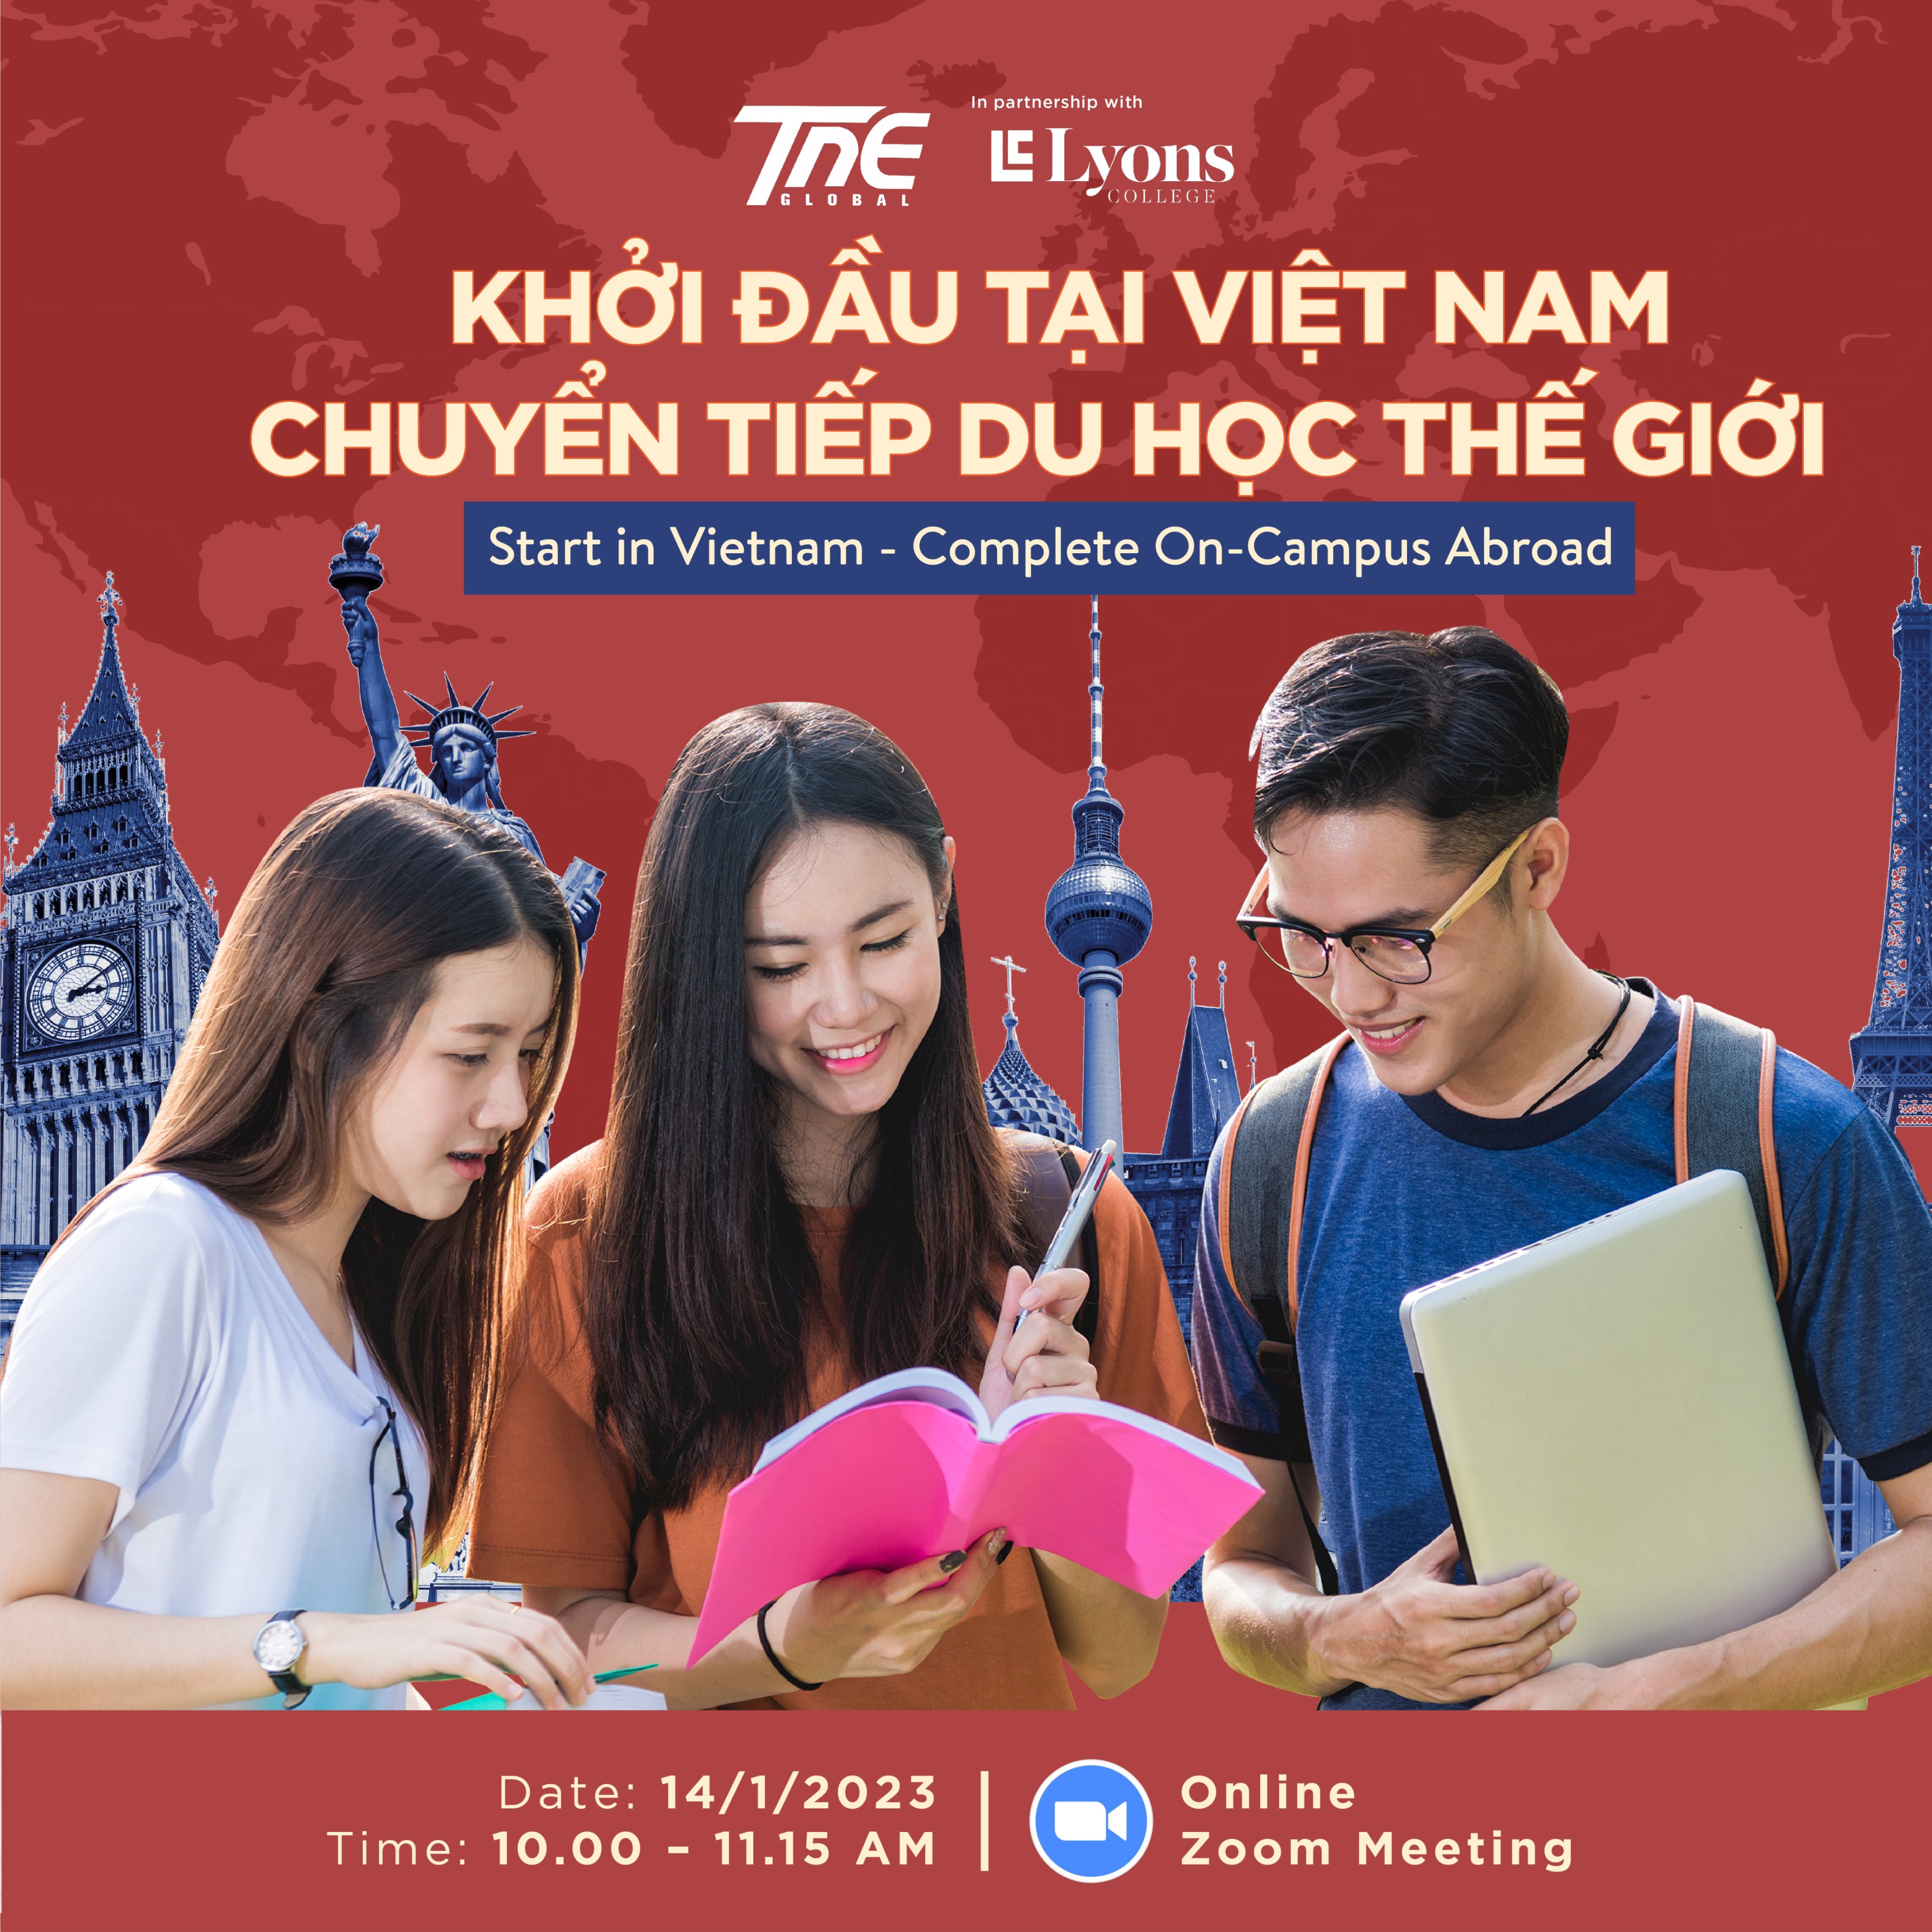 Seminar: Starting in Vietnam, Transferring to Study Abroad